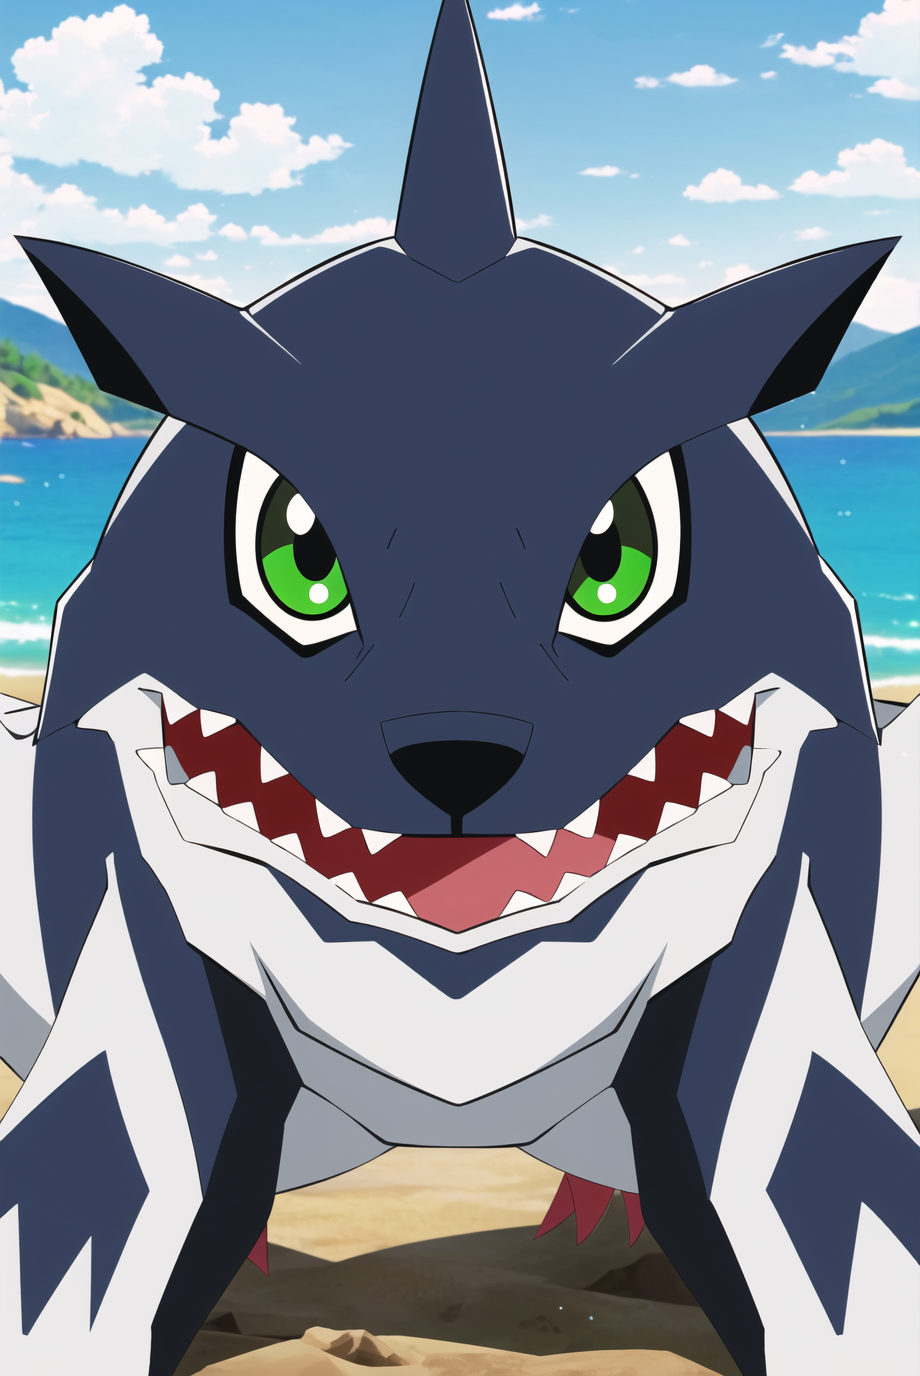 Digimon Adventures Style LoRA image by Lykon